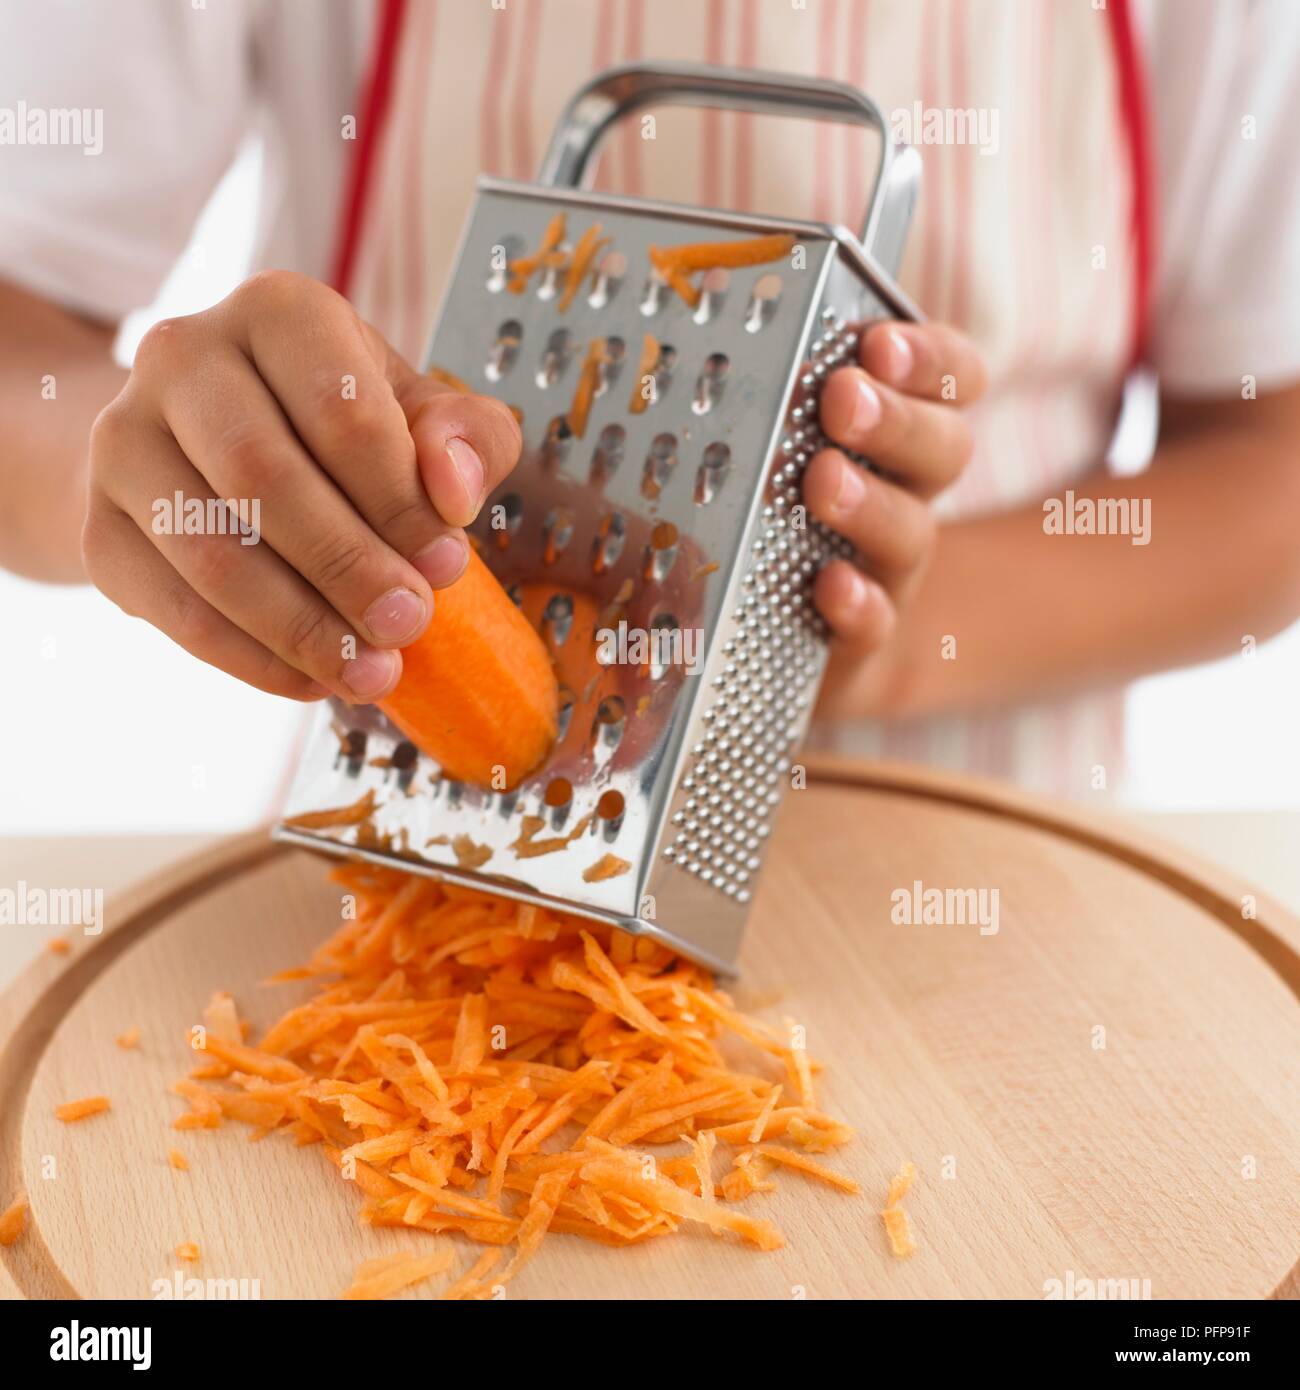 https://c8.alamy.com/comp/PFP91F/boy-using-grater-to-grate-carrot-on-chopping-board-PFP91F.jpg